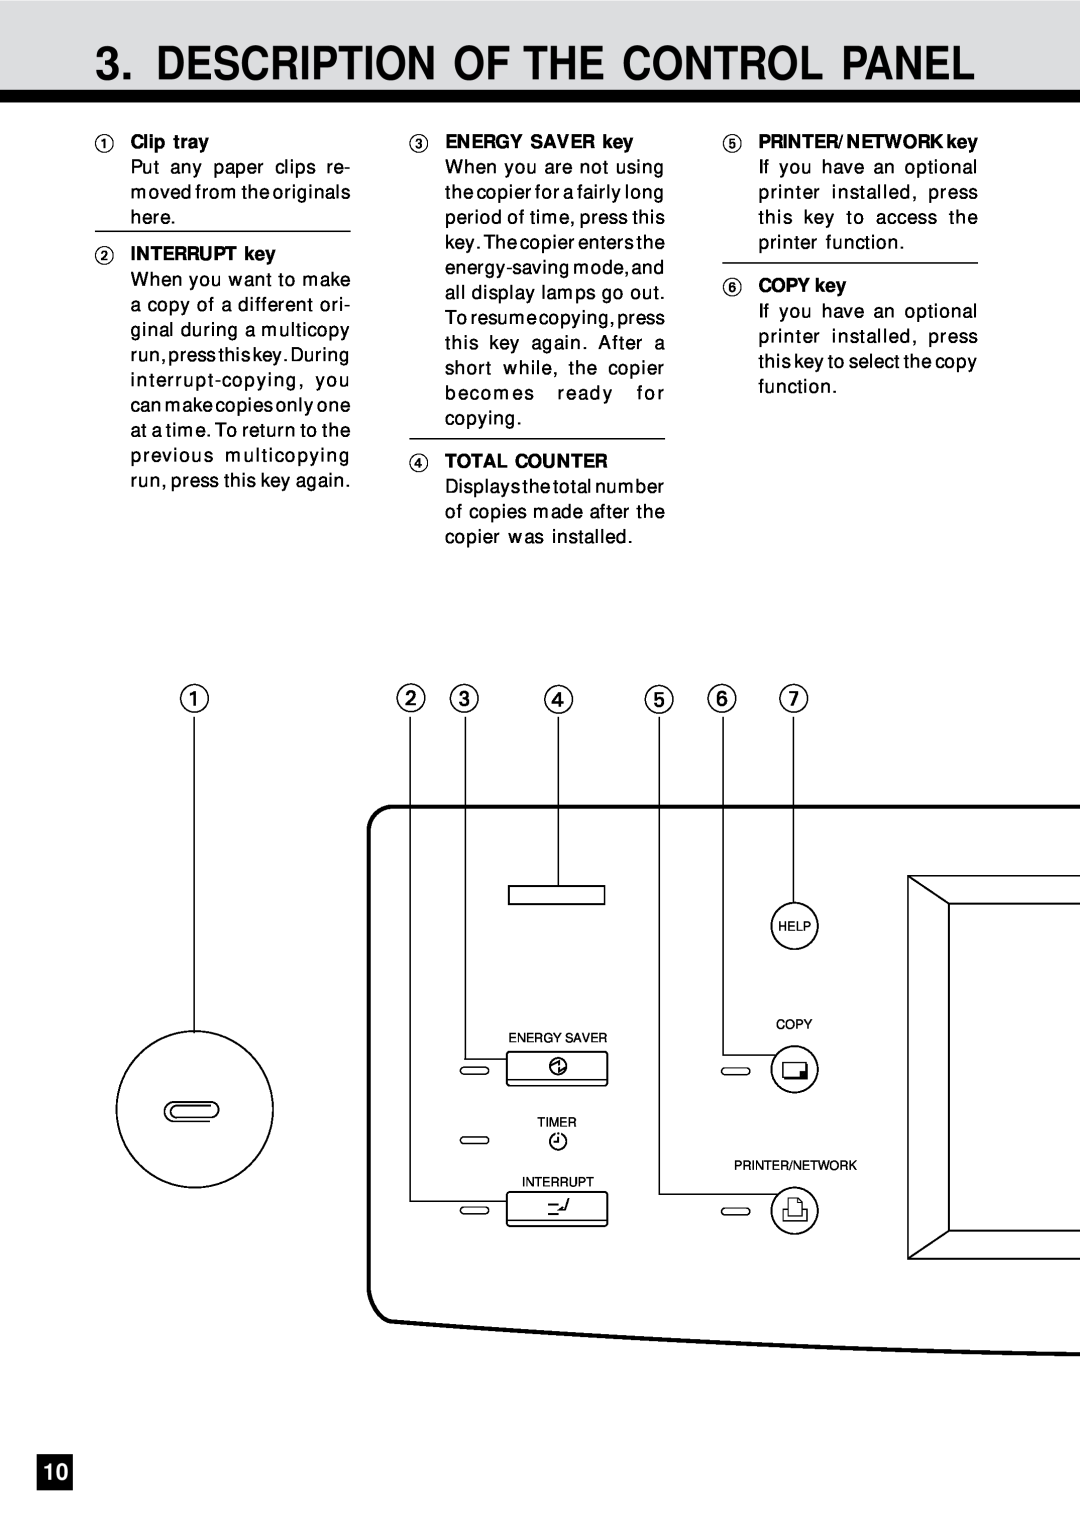 Sharp AR-650 operation manual Description Of The Control Panel, Clip tray, INTERRUPT key, COPY key 